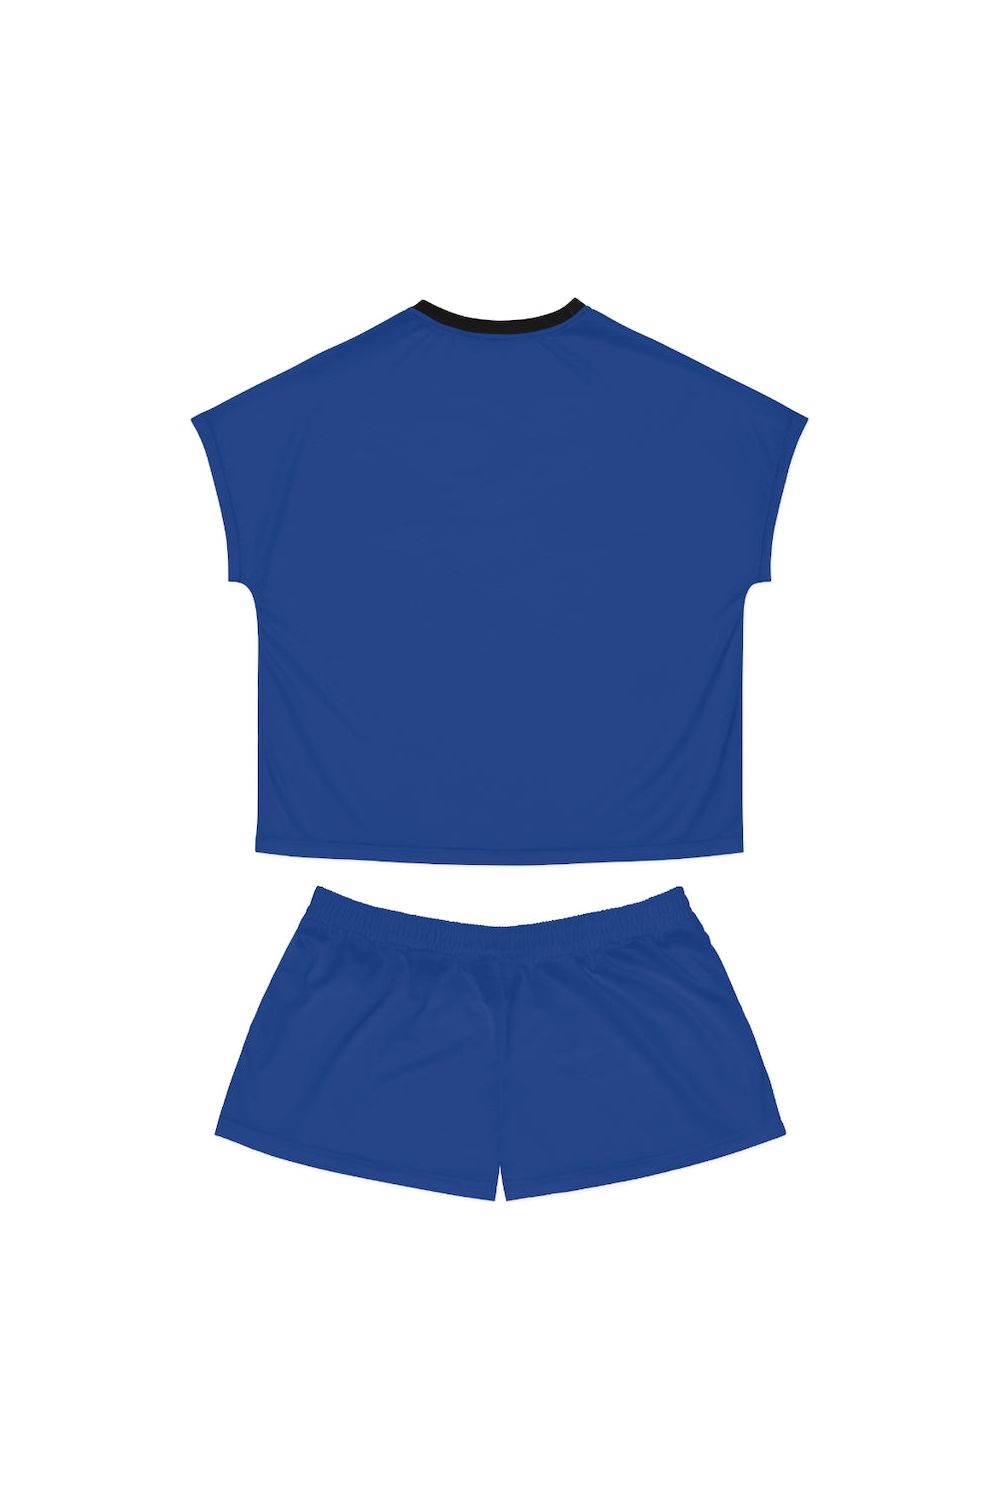 Women's Blue Shorts Black Smiley Face Short Pajama Set